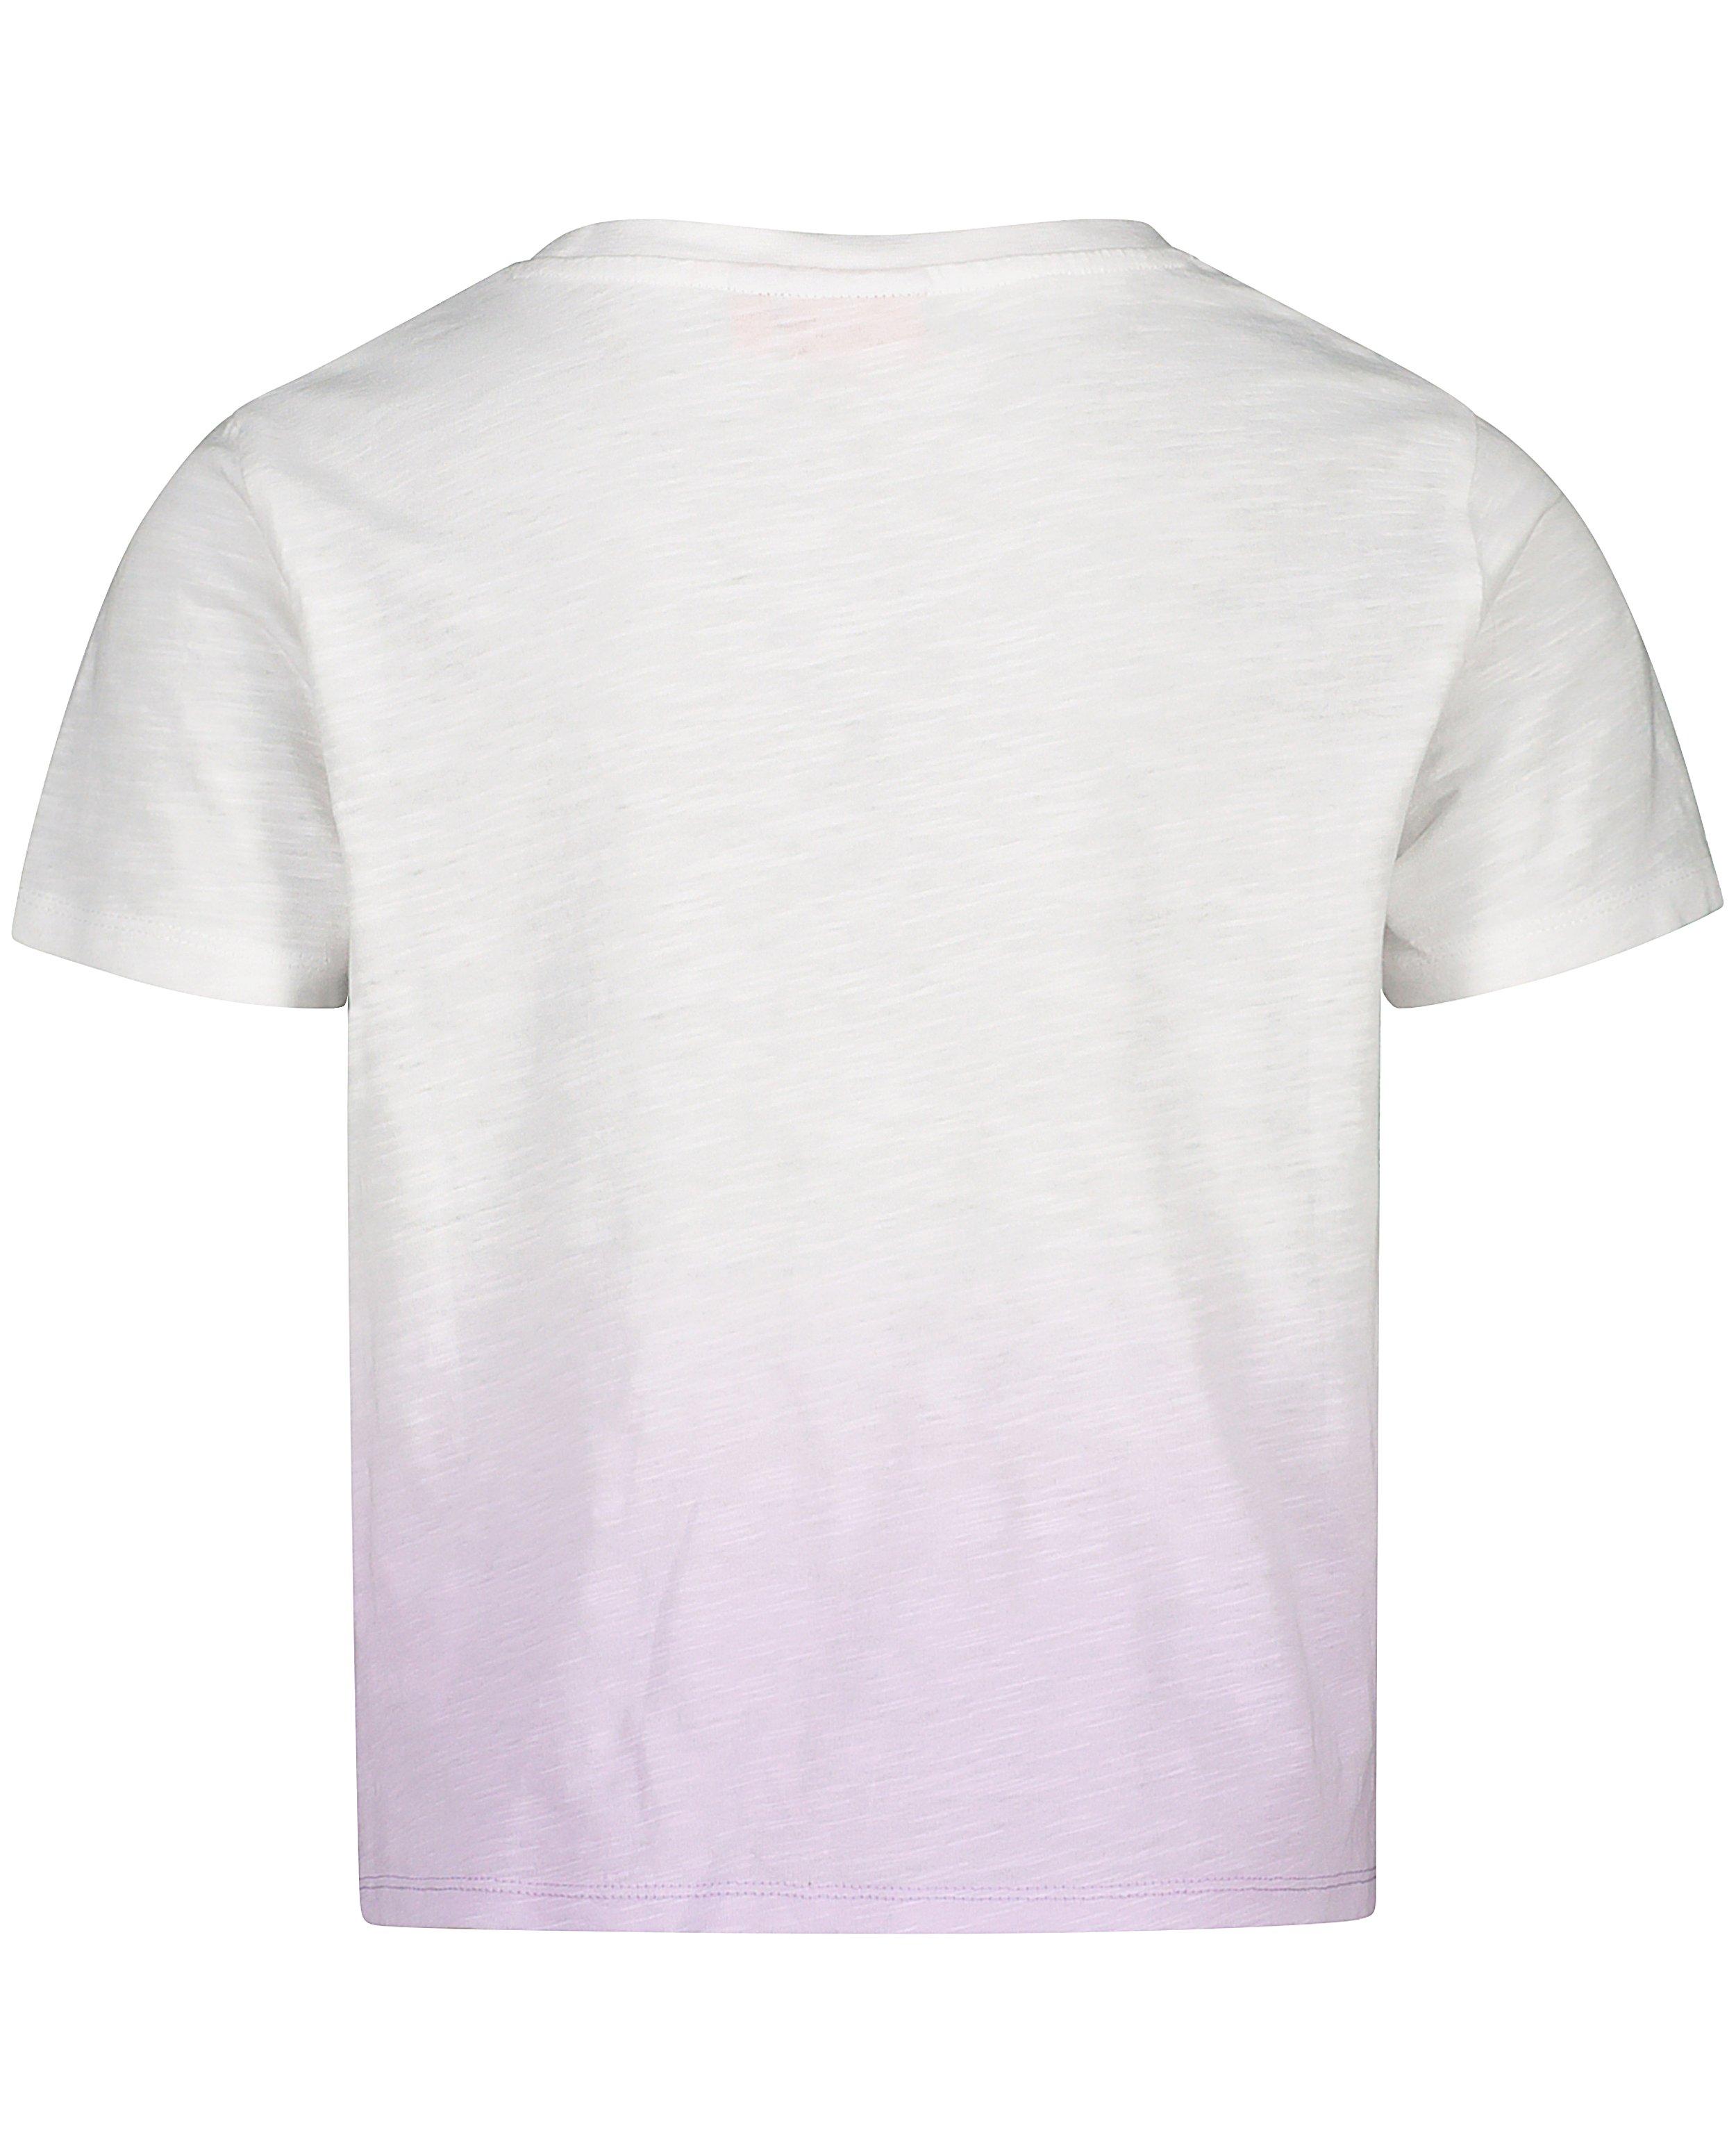 T-shirts - T-shirt met gradiënt #LikeMe